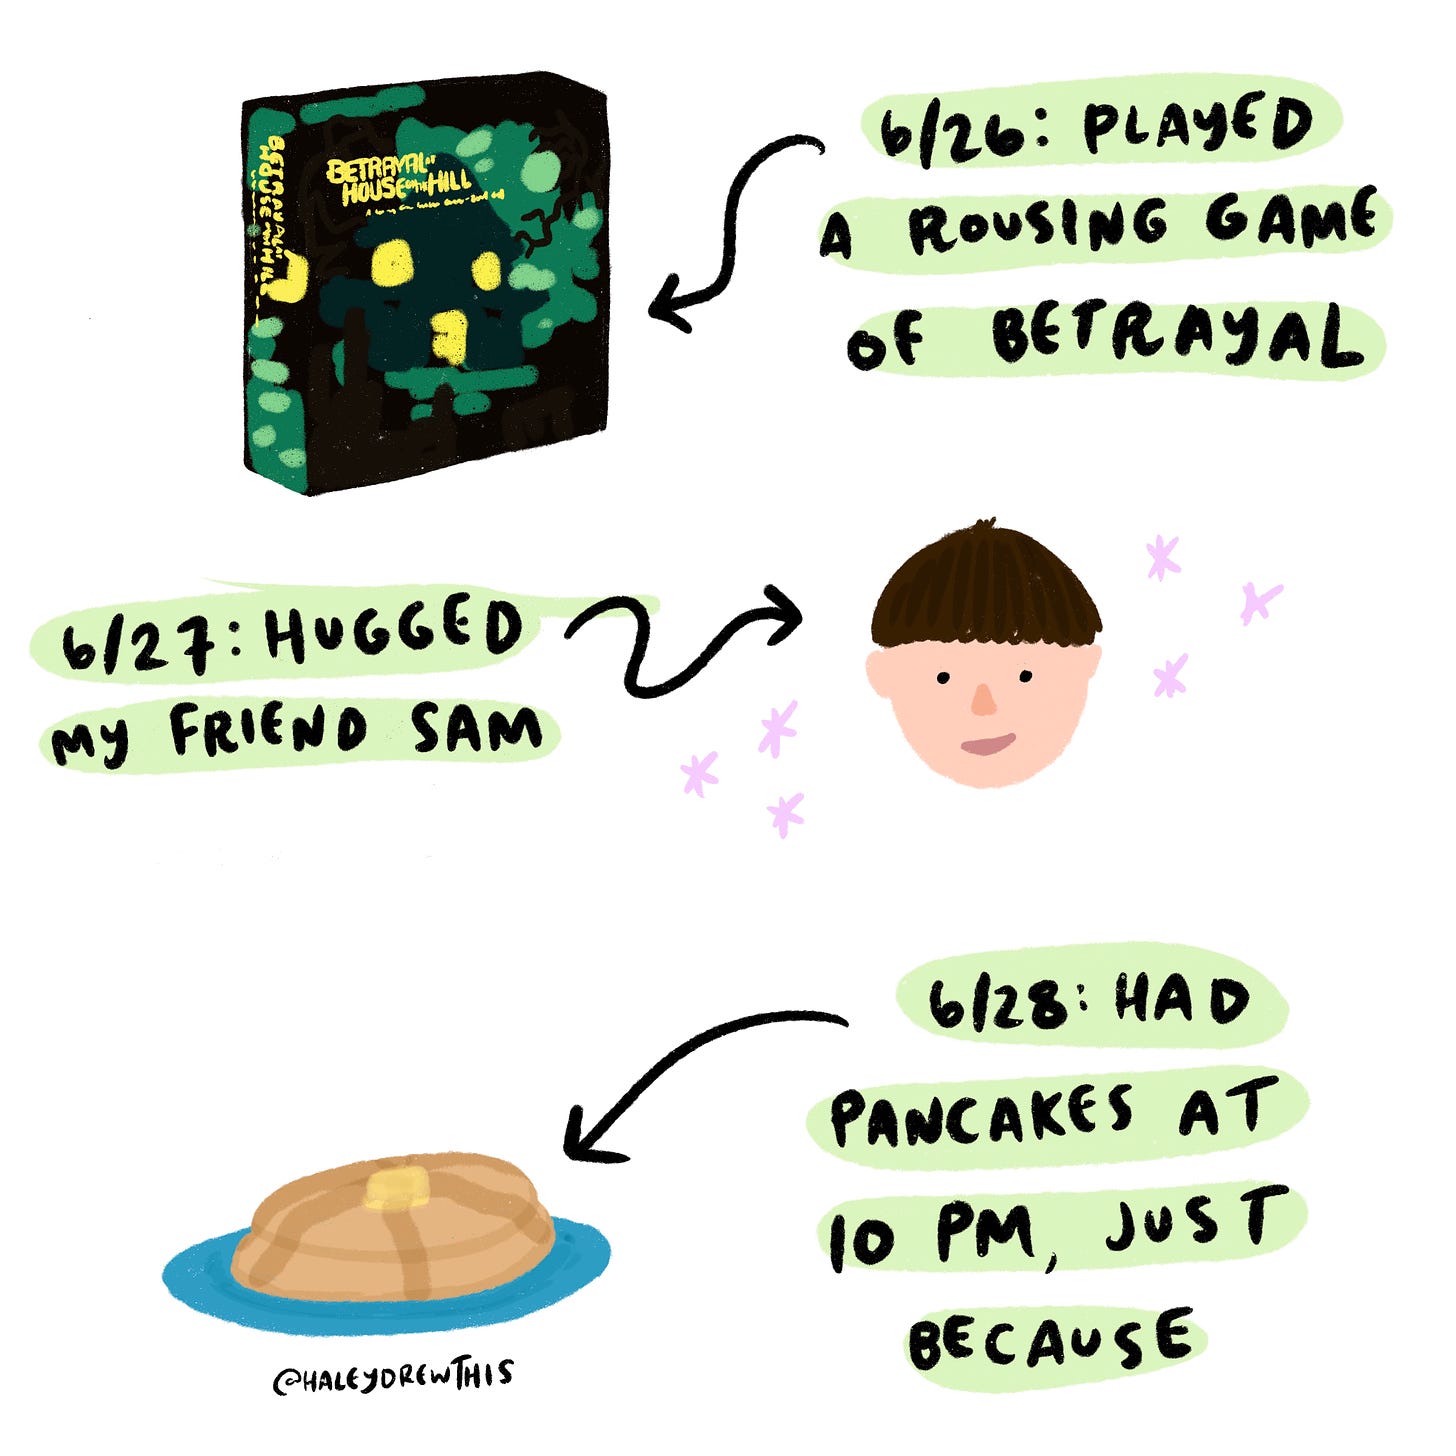 played betrayl, saw sam, ate pancakes